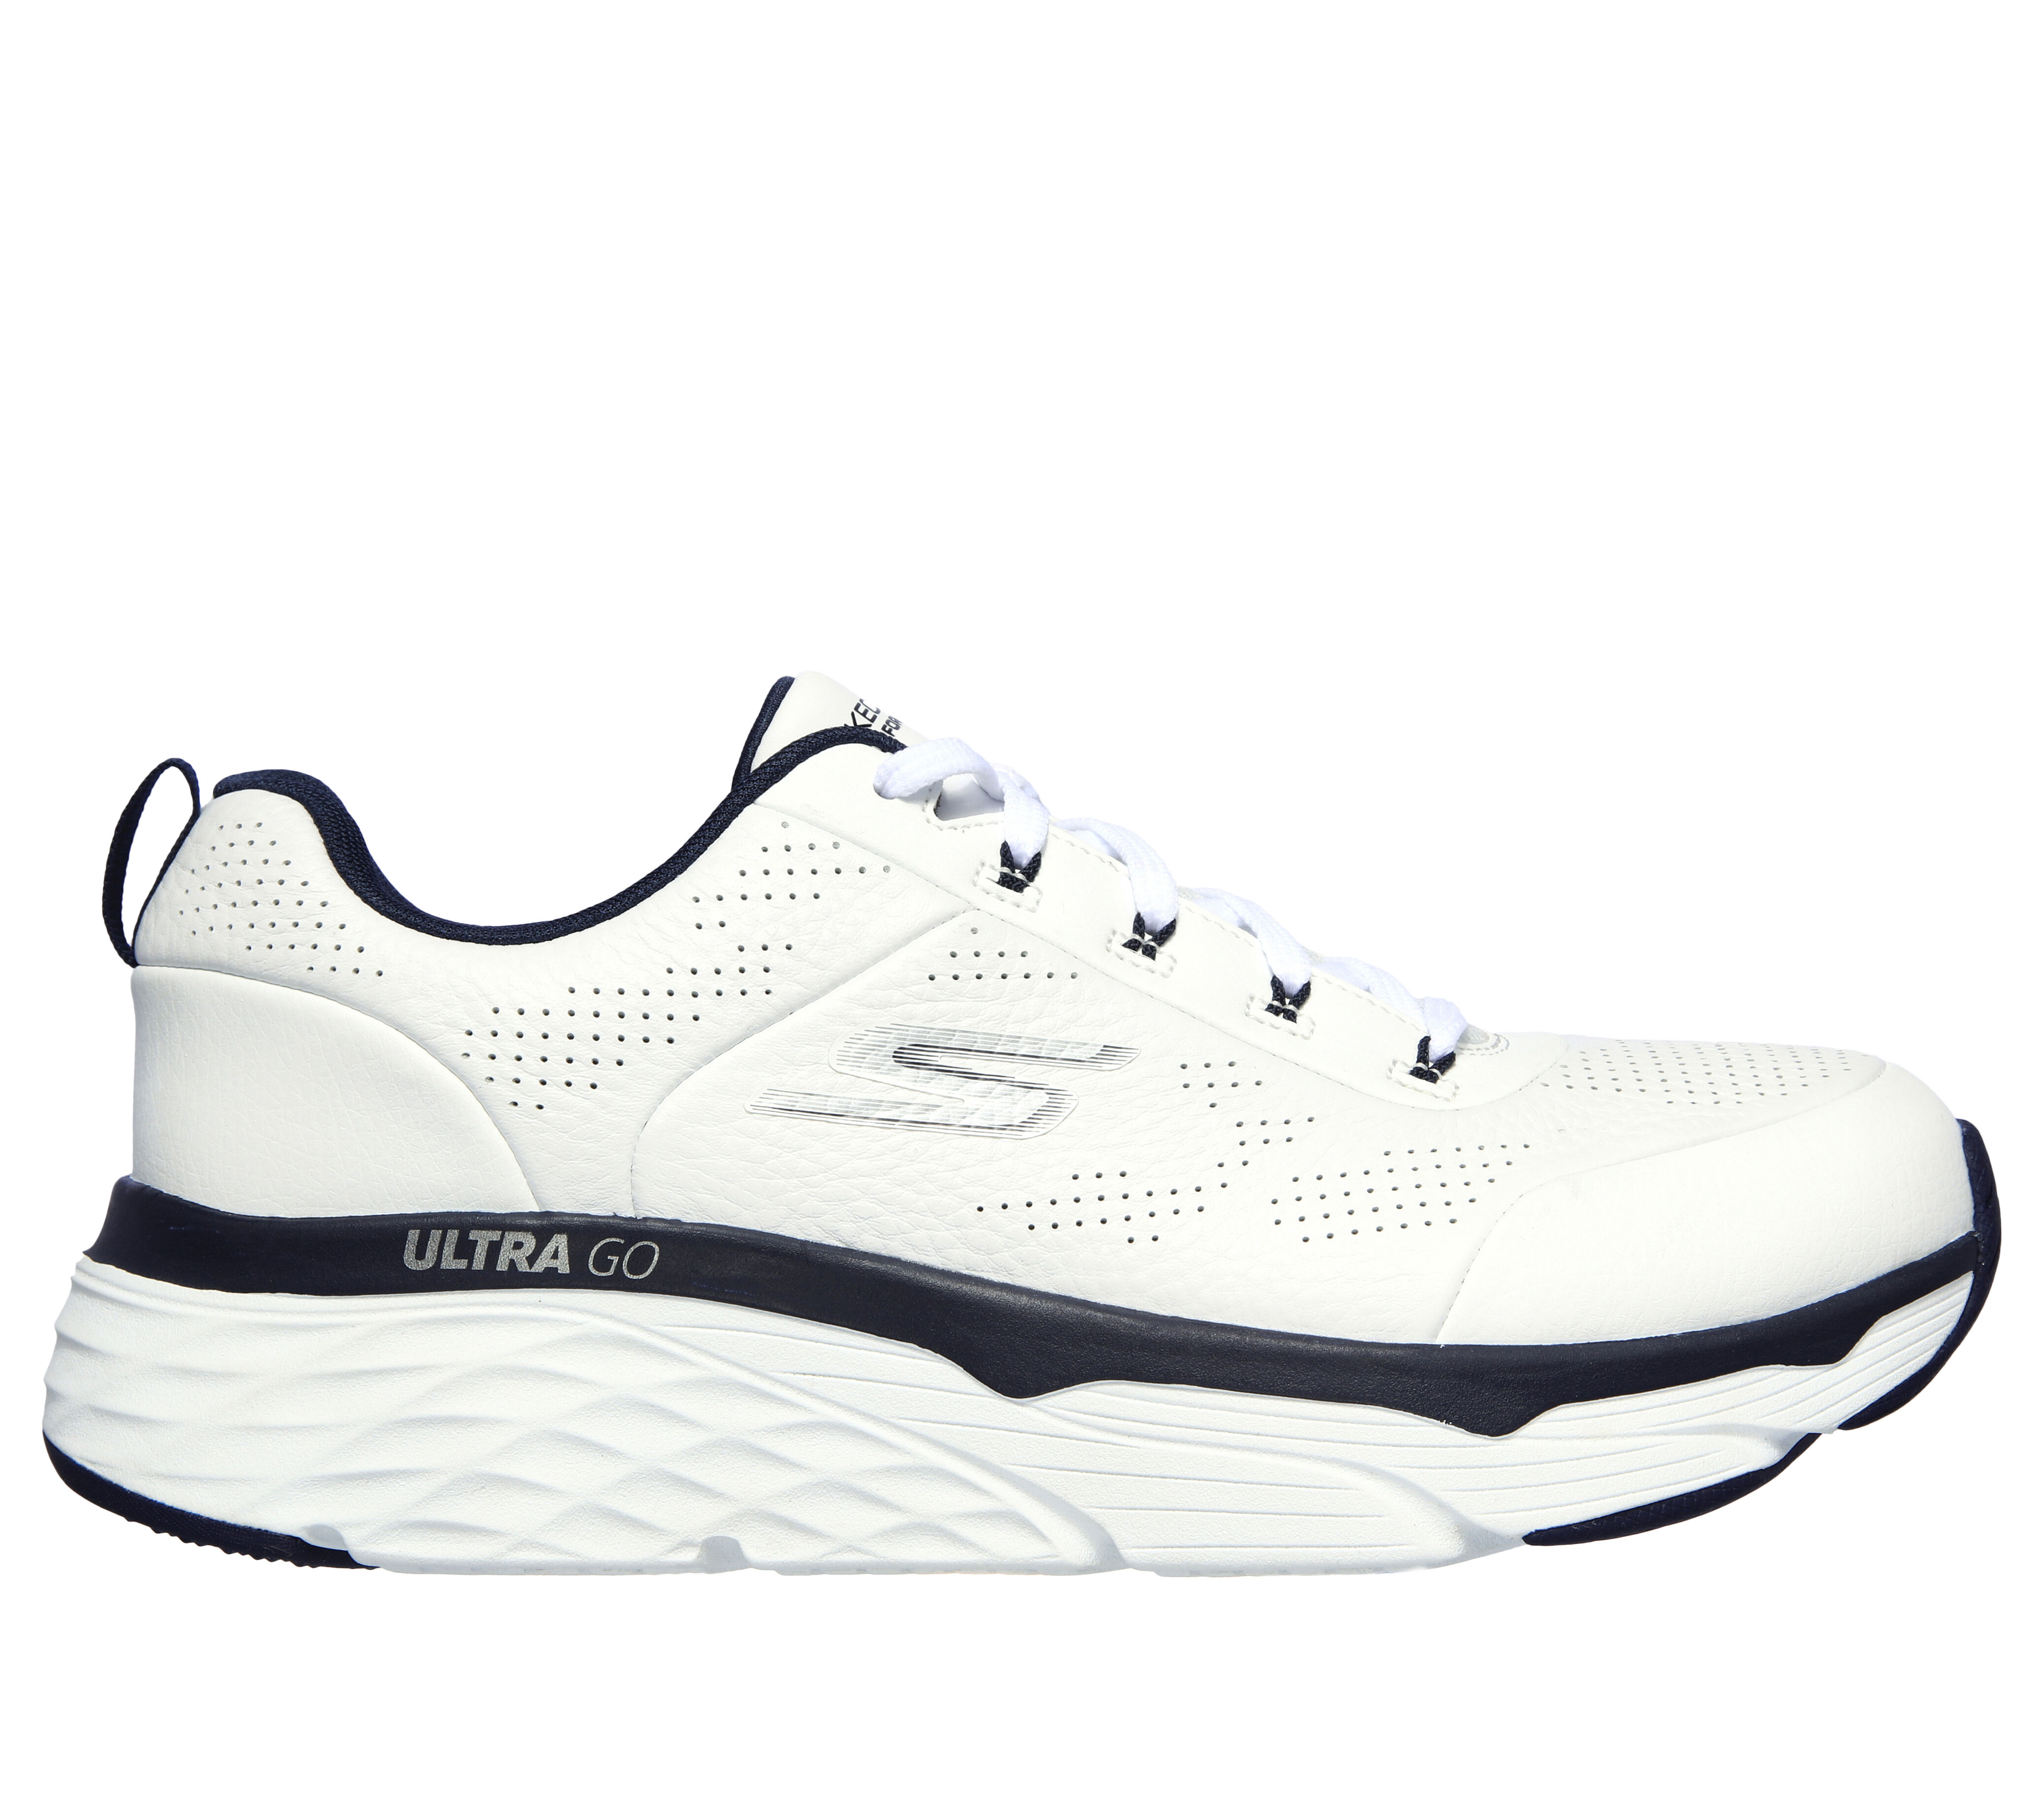 Running Shoes for Men | GOrun | SKECHERS